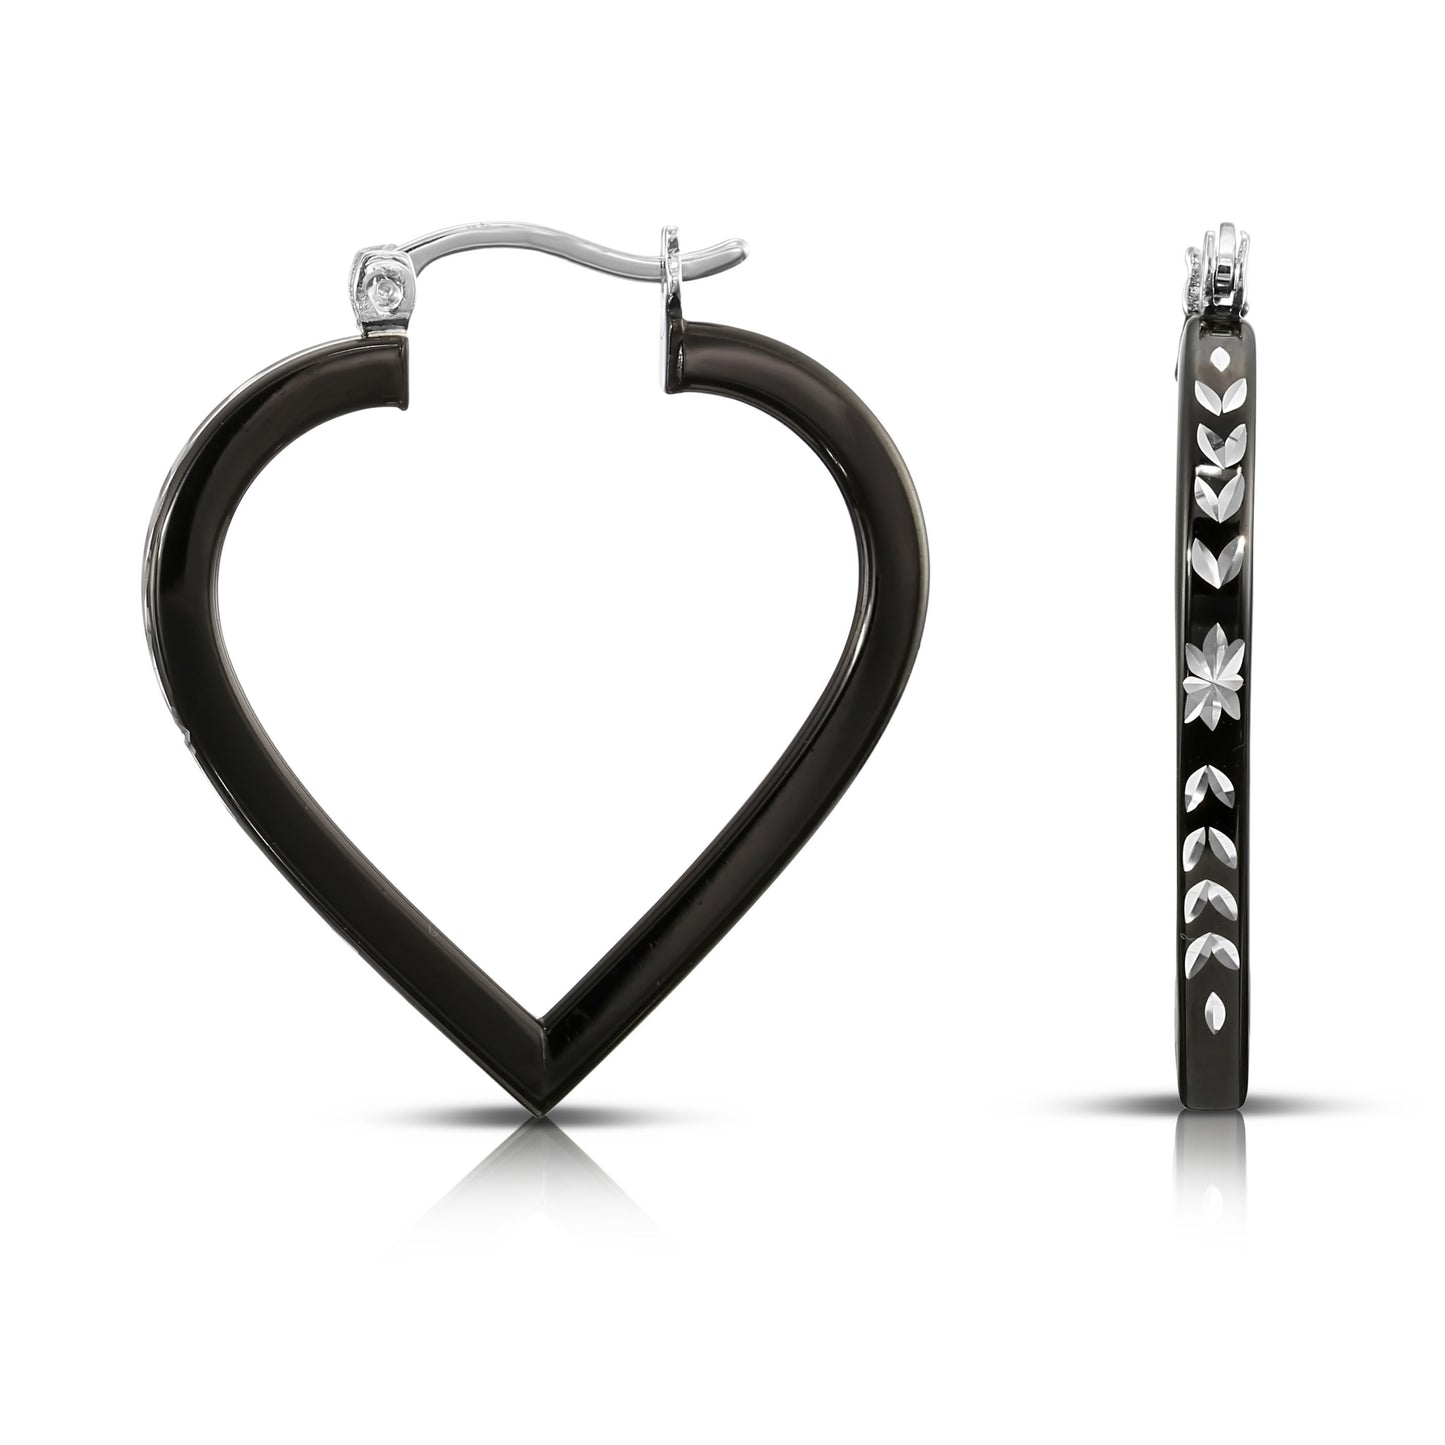 Fancy Glossy Black Sterling Silver Heart Hoop Earrings with Hand Engraved Floral Diamond-cut